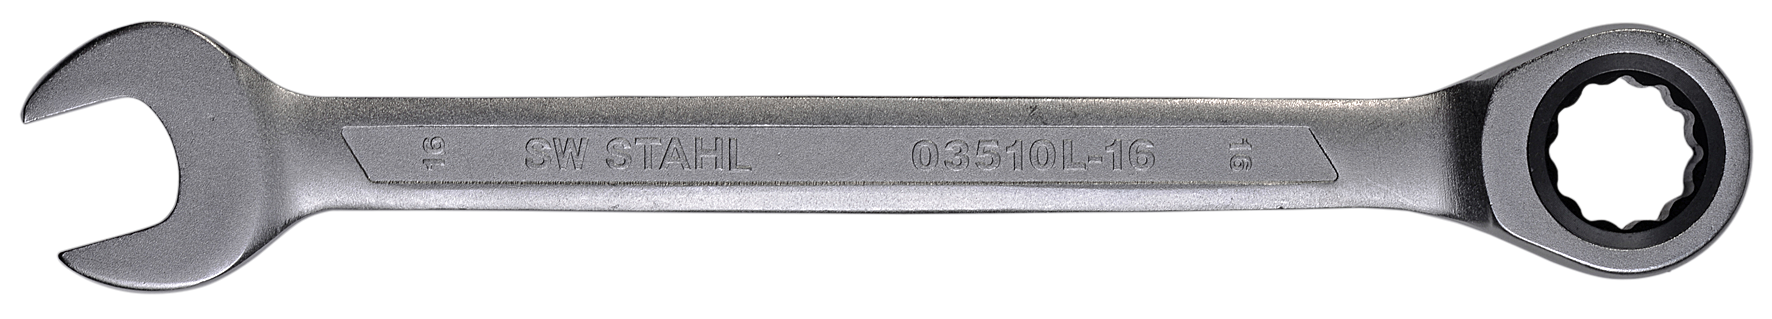 SW-STAHL 03510L-16 Gabelringratschenschlüssel, 16 mm